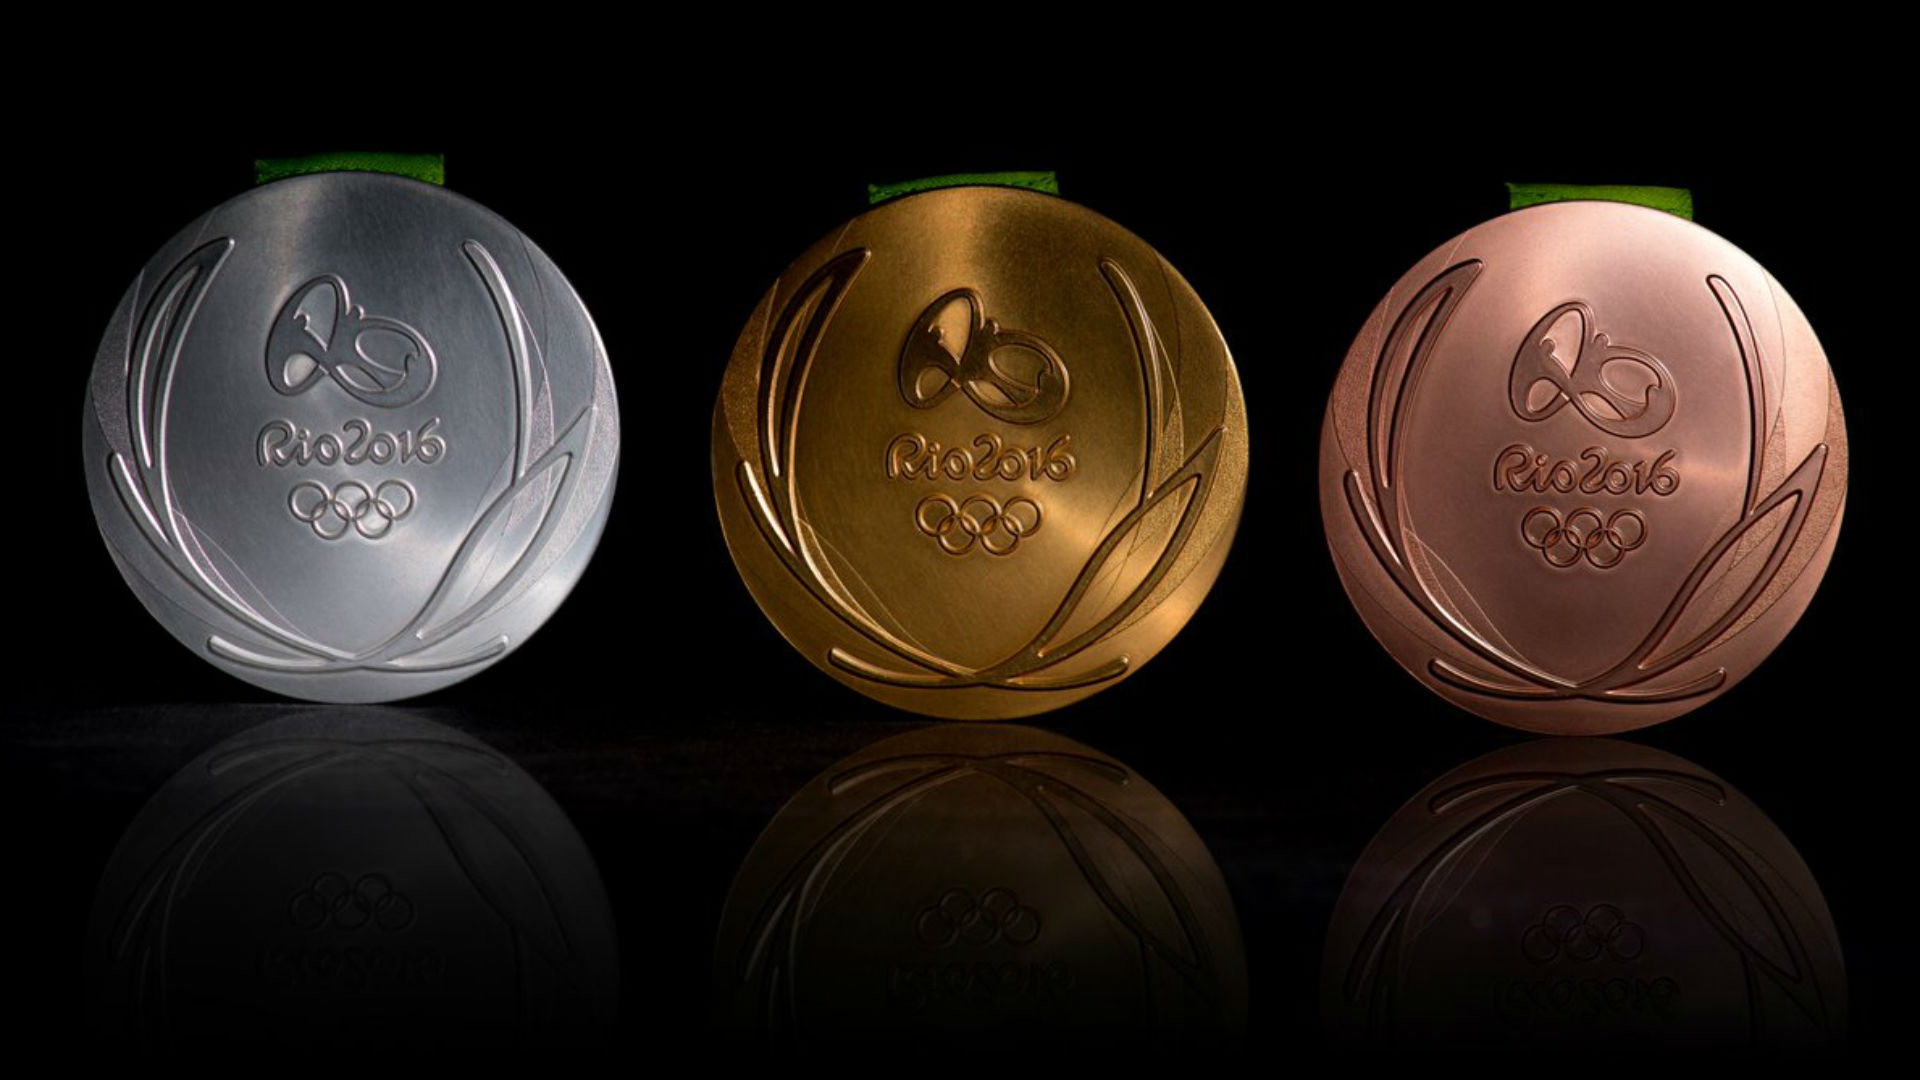 Rio 2016 Olympics medal design unveiled Athletics Sporting News